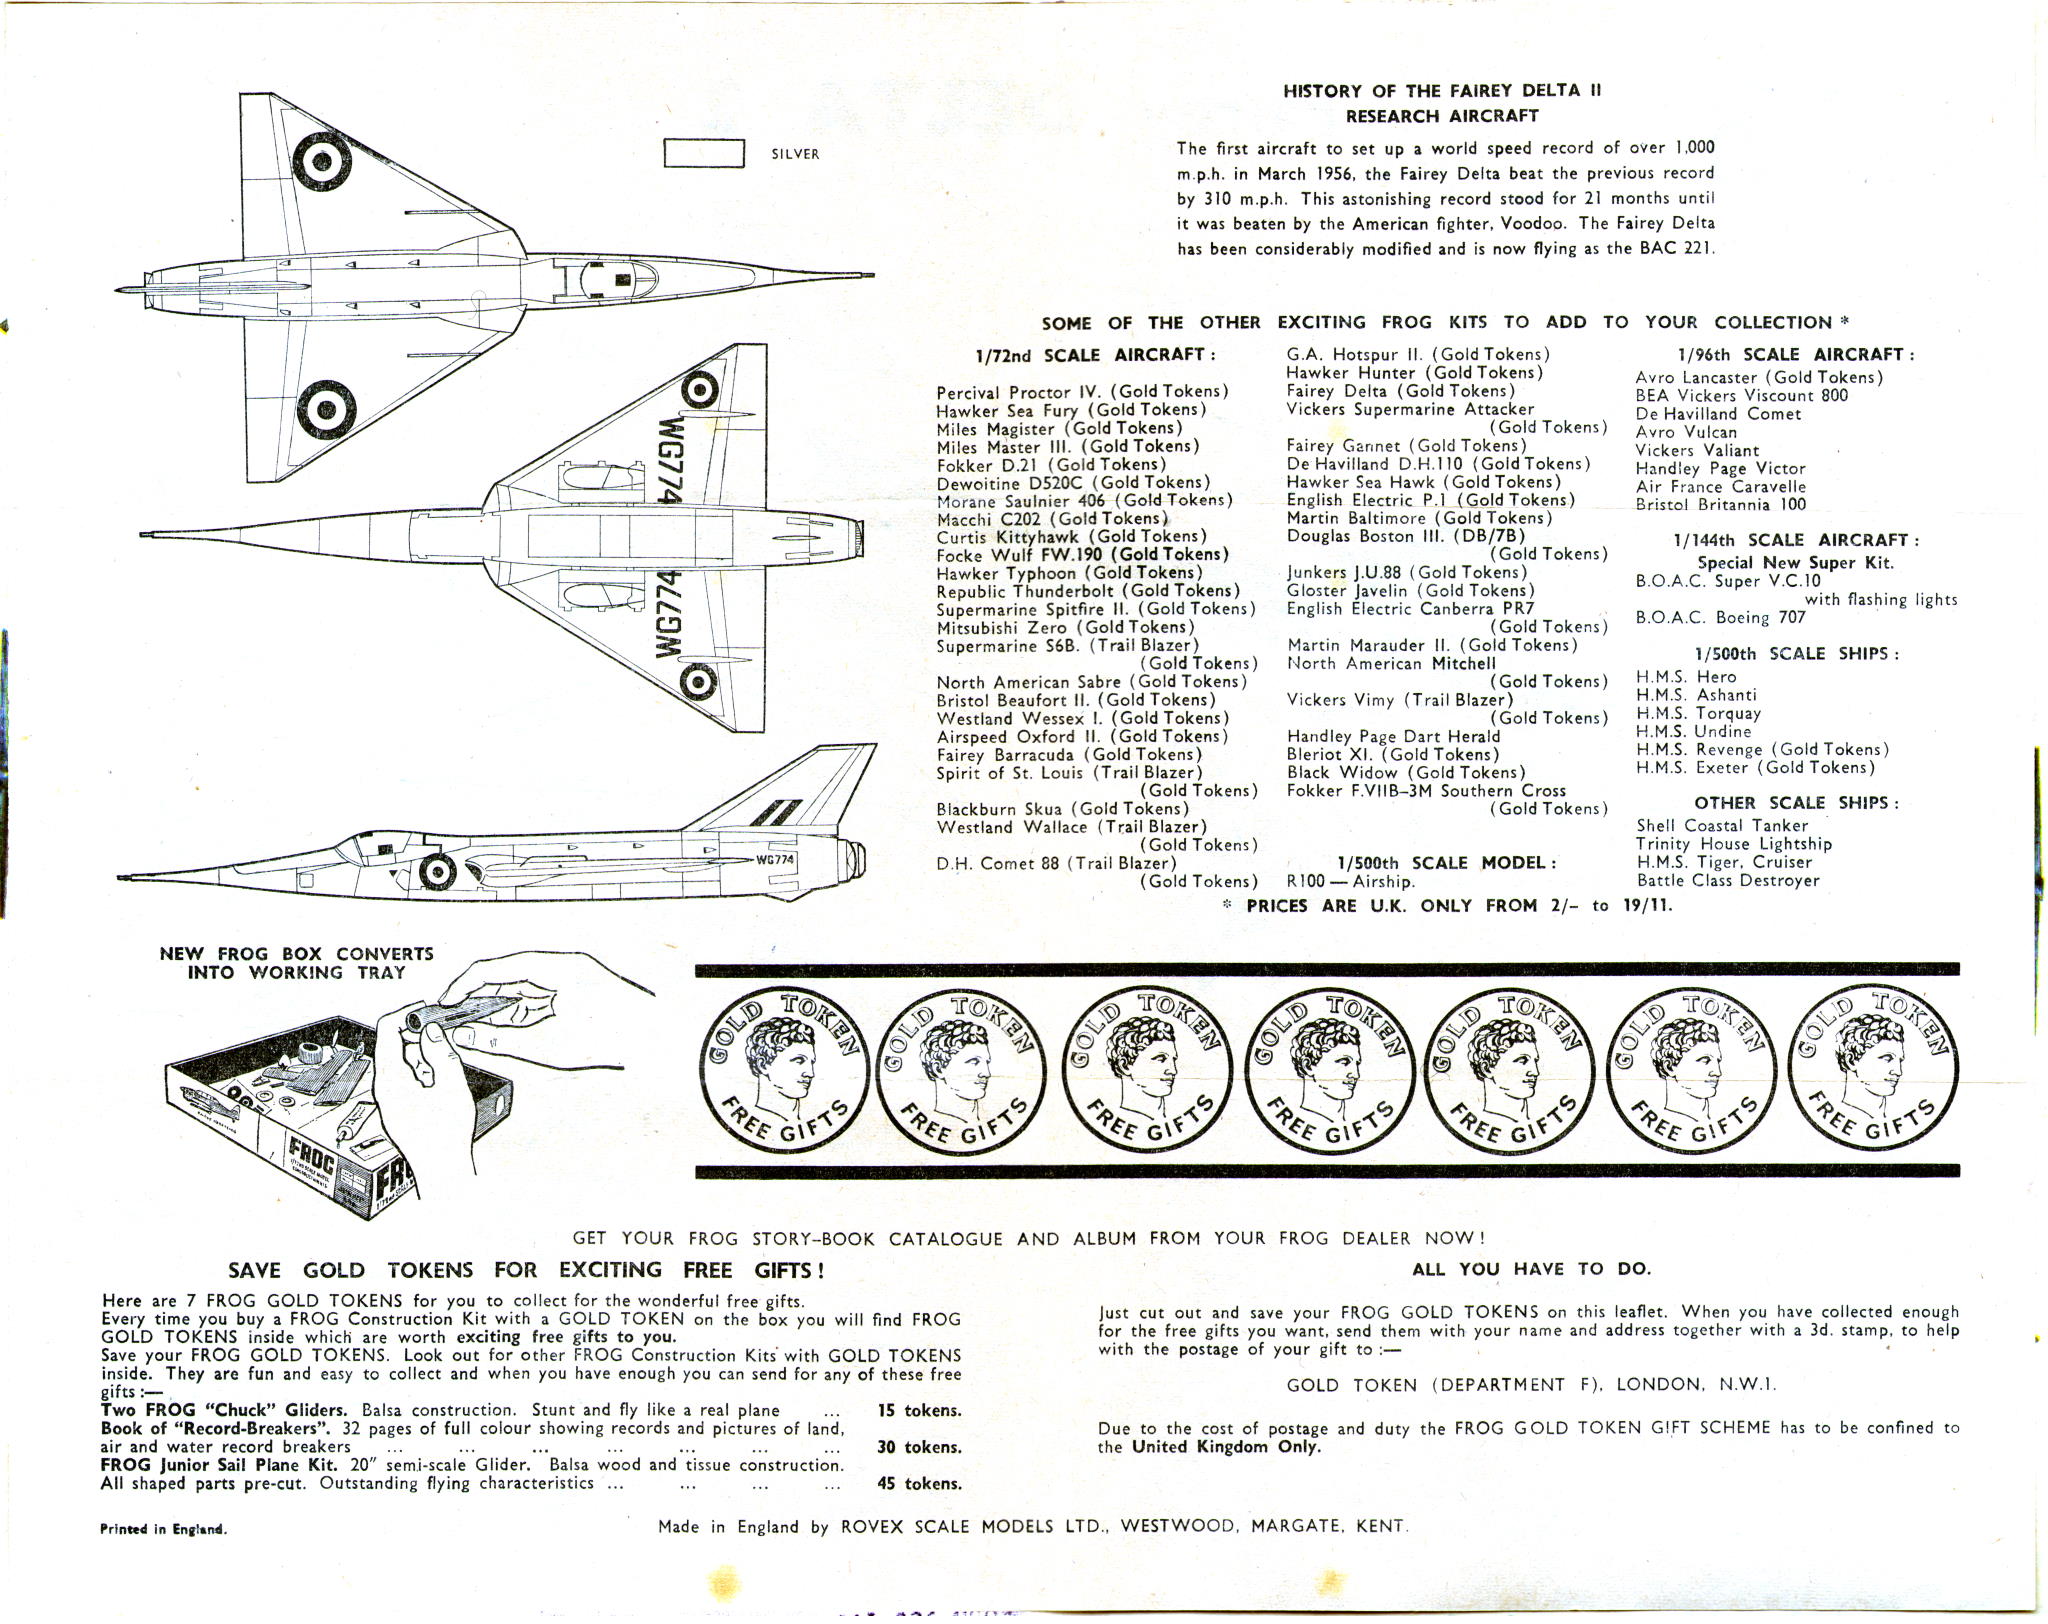 Схема окраски FROG F333 Fairey Delta - Research Aircraft with Gold Tokens, IMA, 1965-66